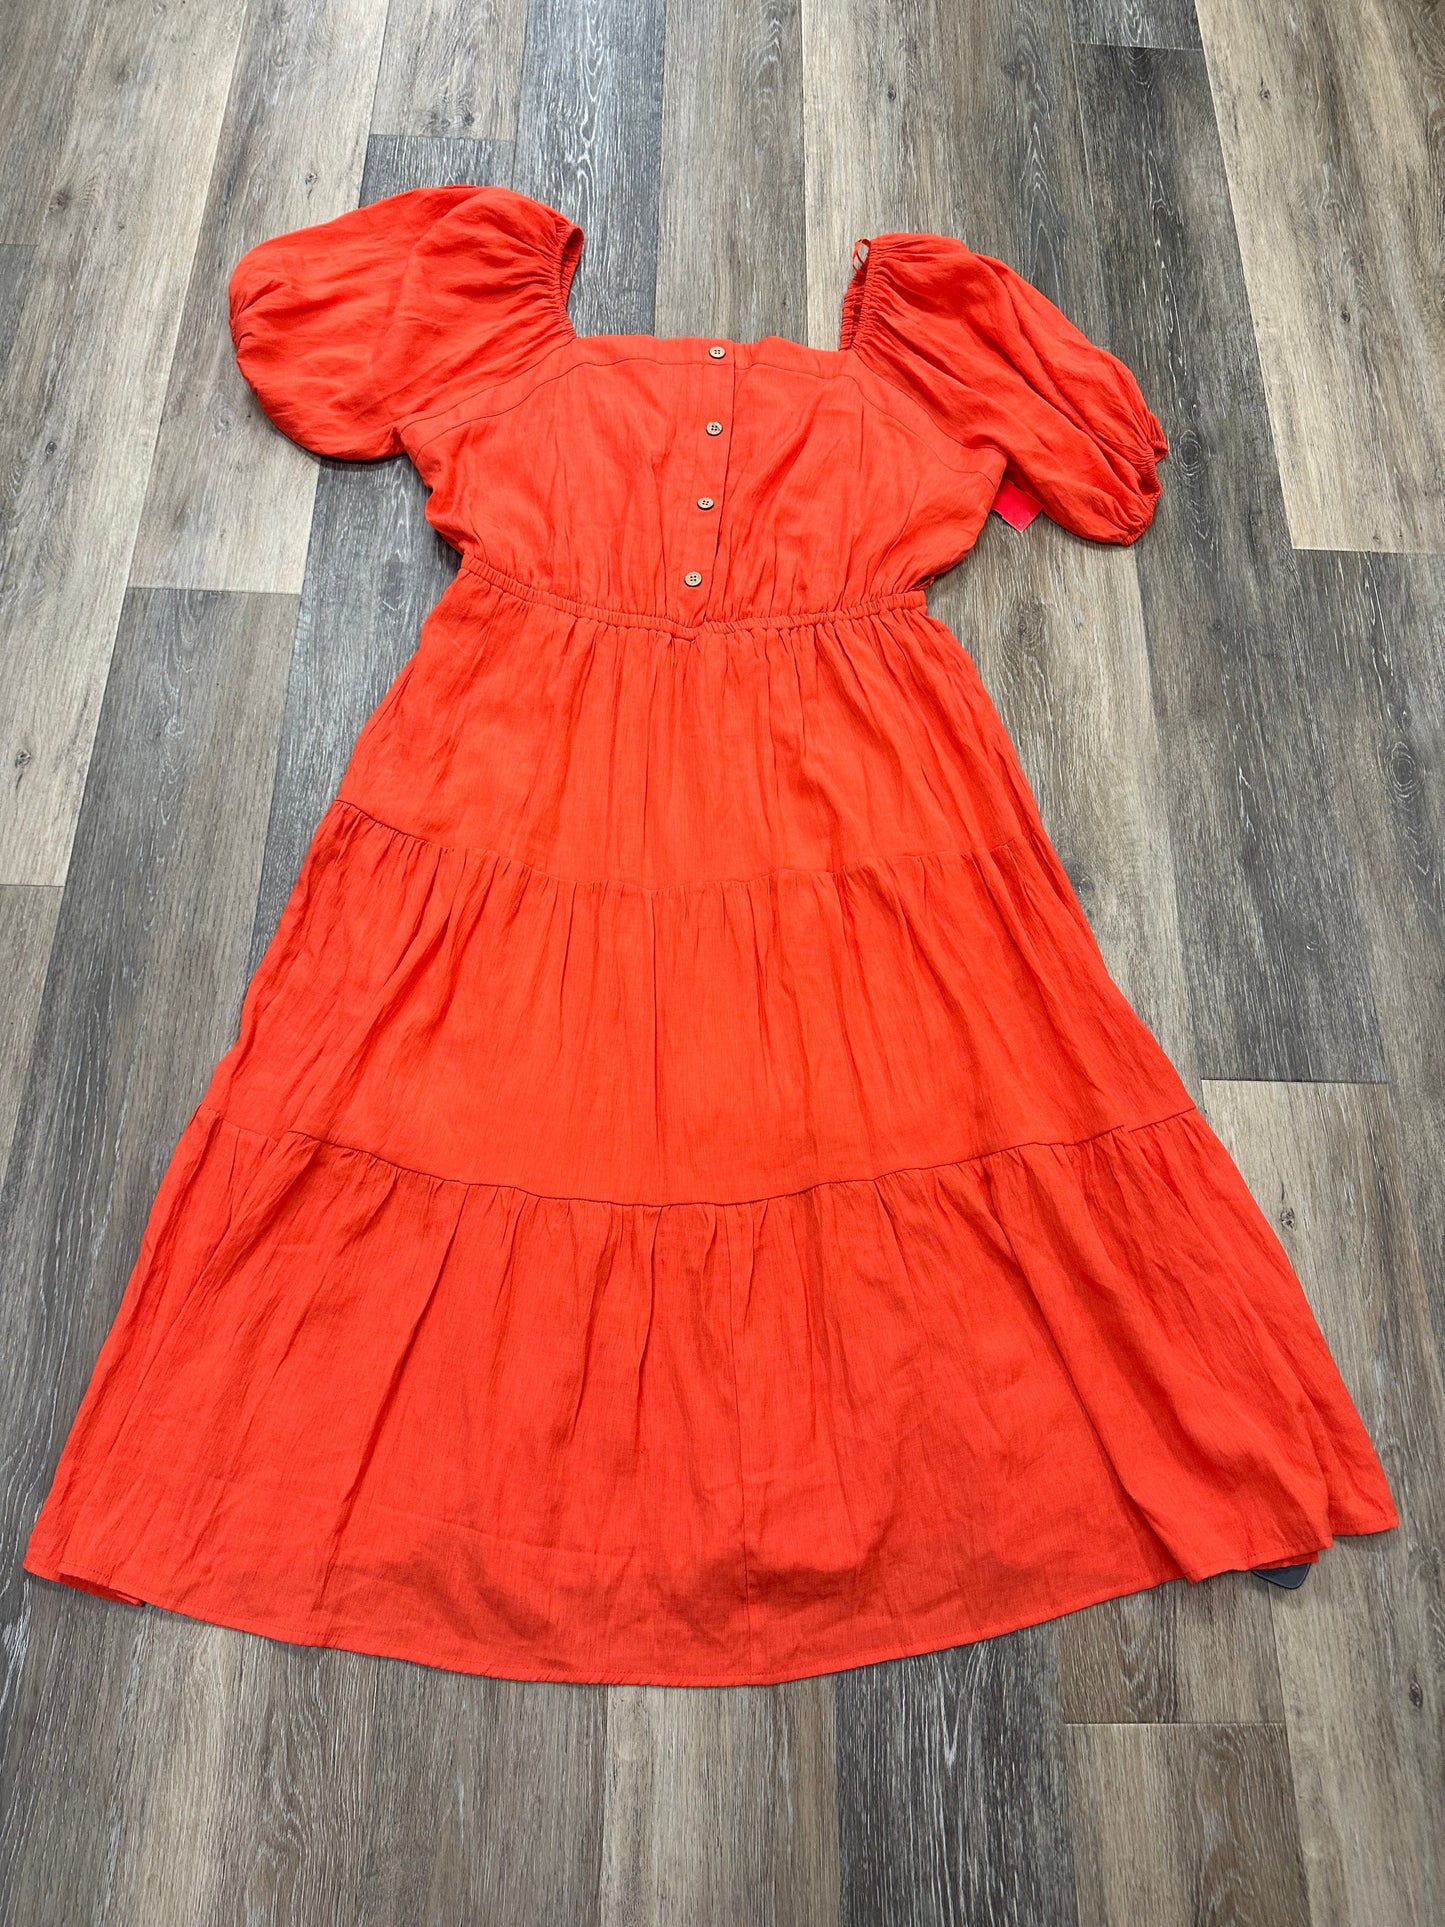 Orange Dress Party Long Jealous Tomato, Size 1x